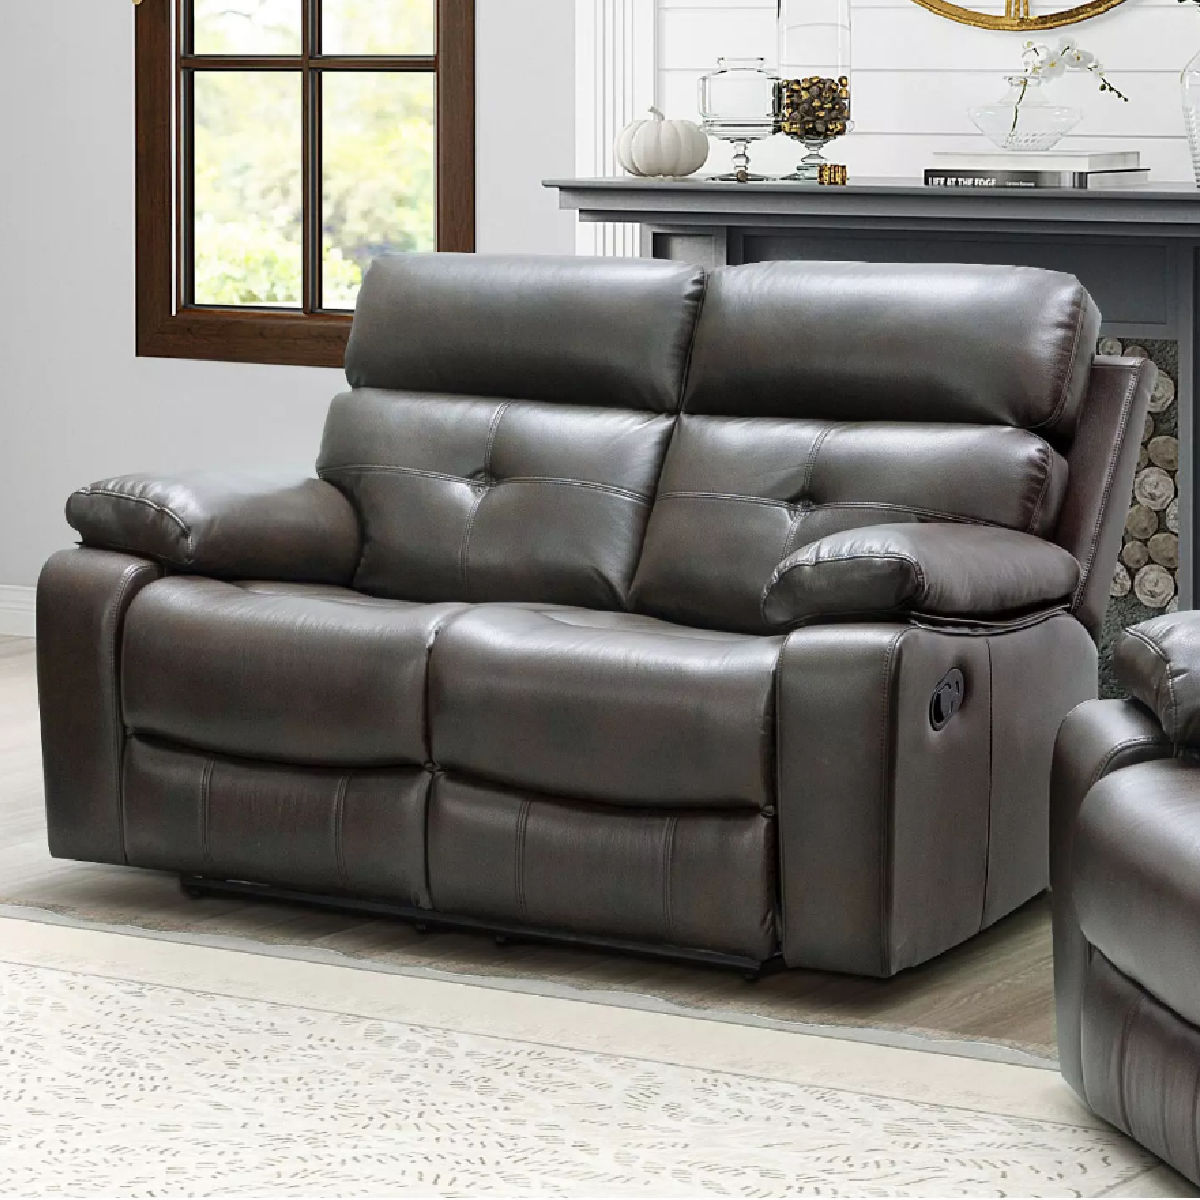 Abbyson Living Augusta 3-Piece Reclining Sofa, Loveseat and Chair Set